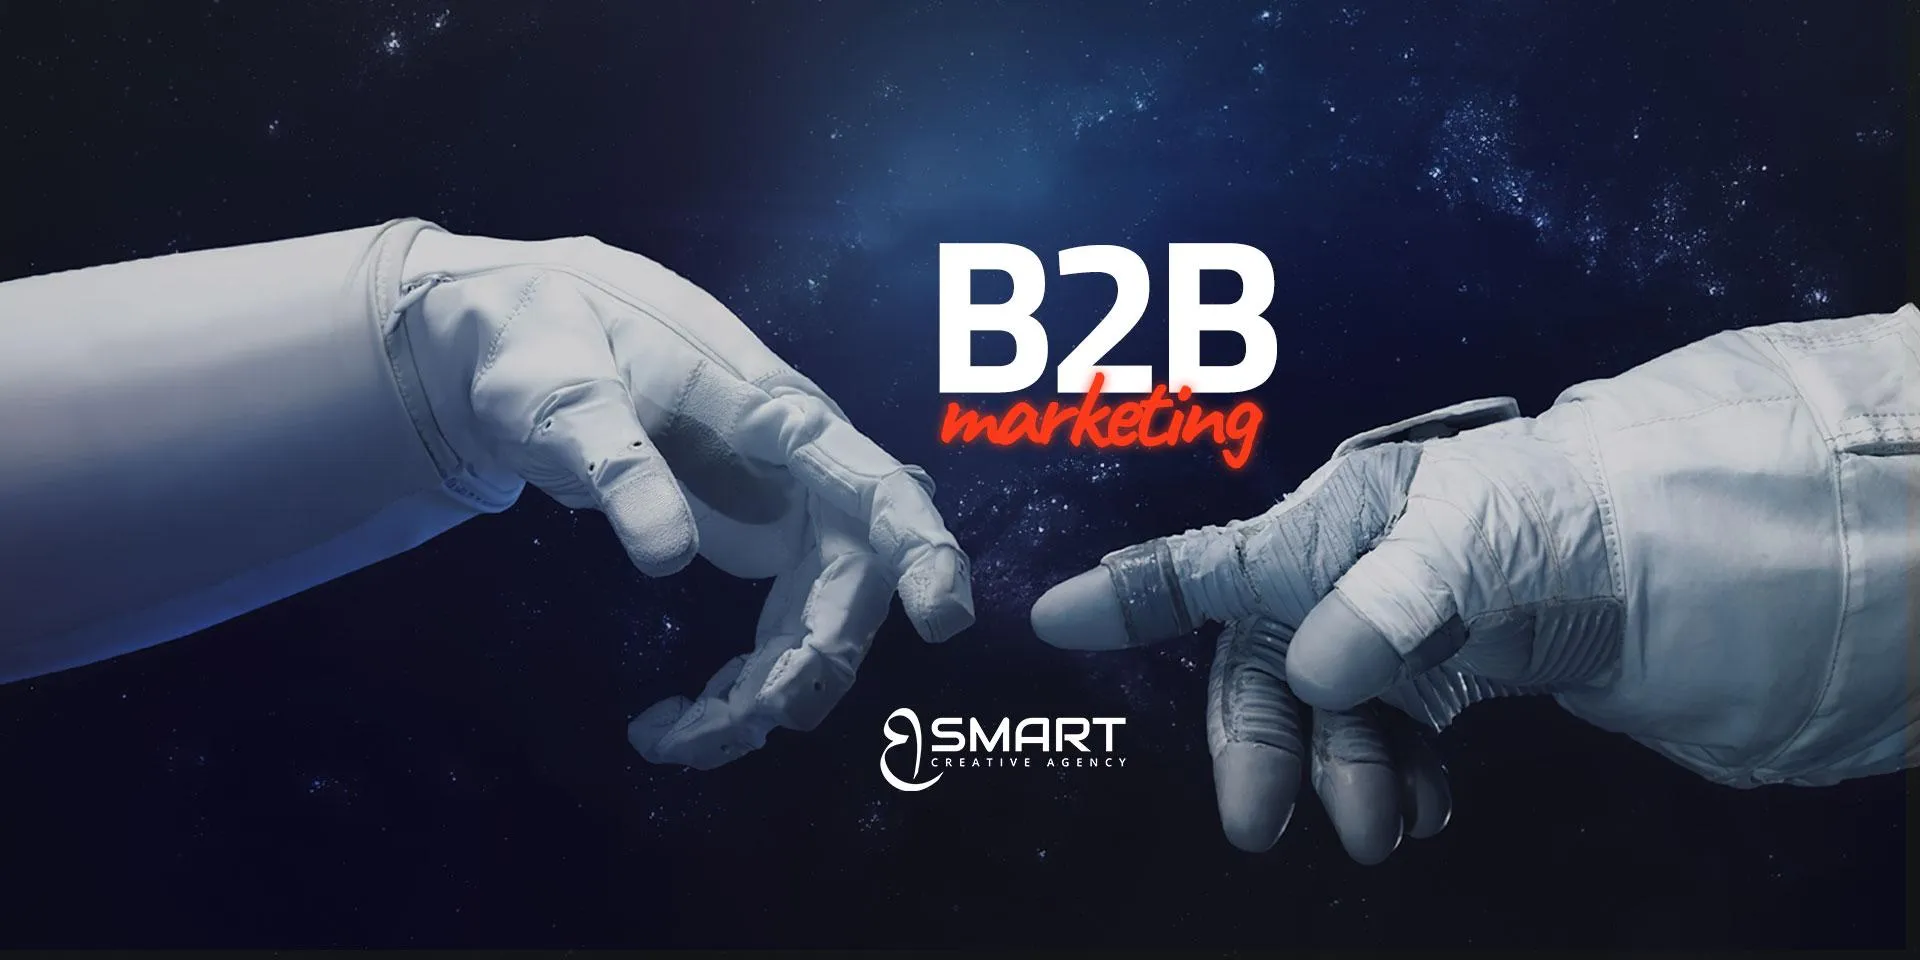 The world of BB Marketing